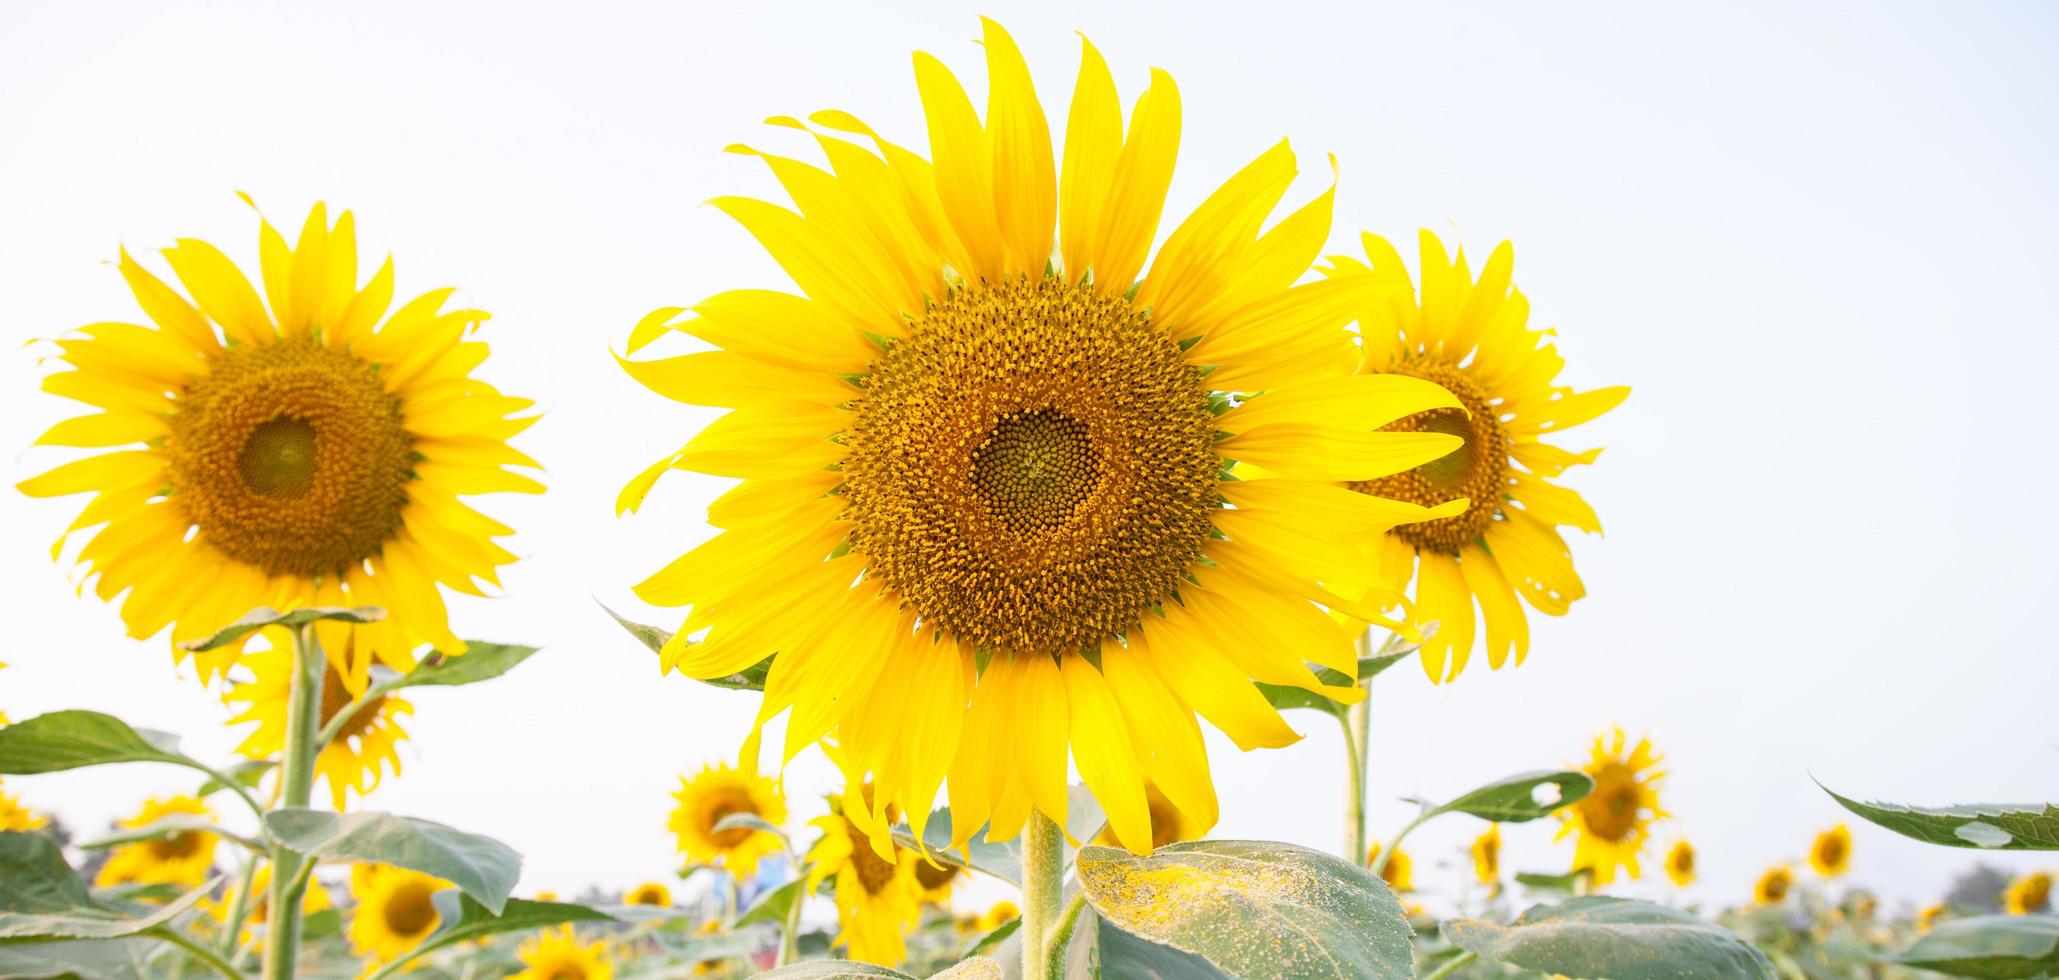 Sunflowers on the sunflower field photo